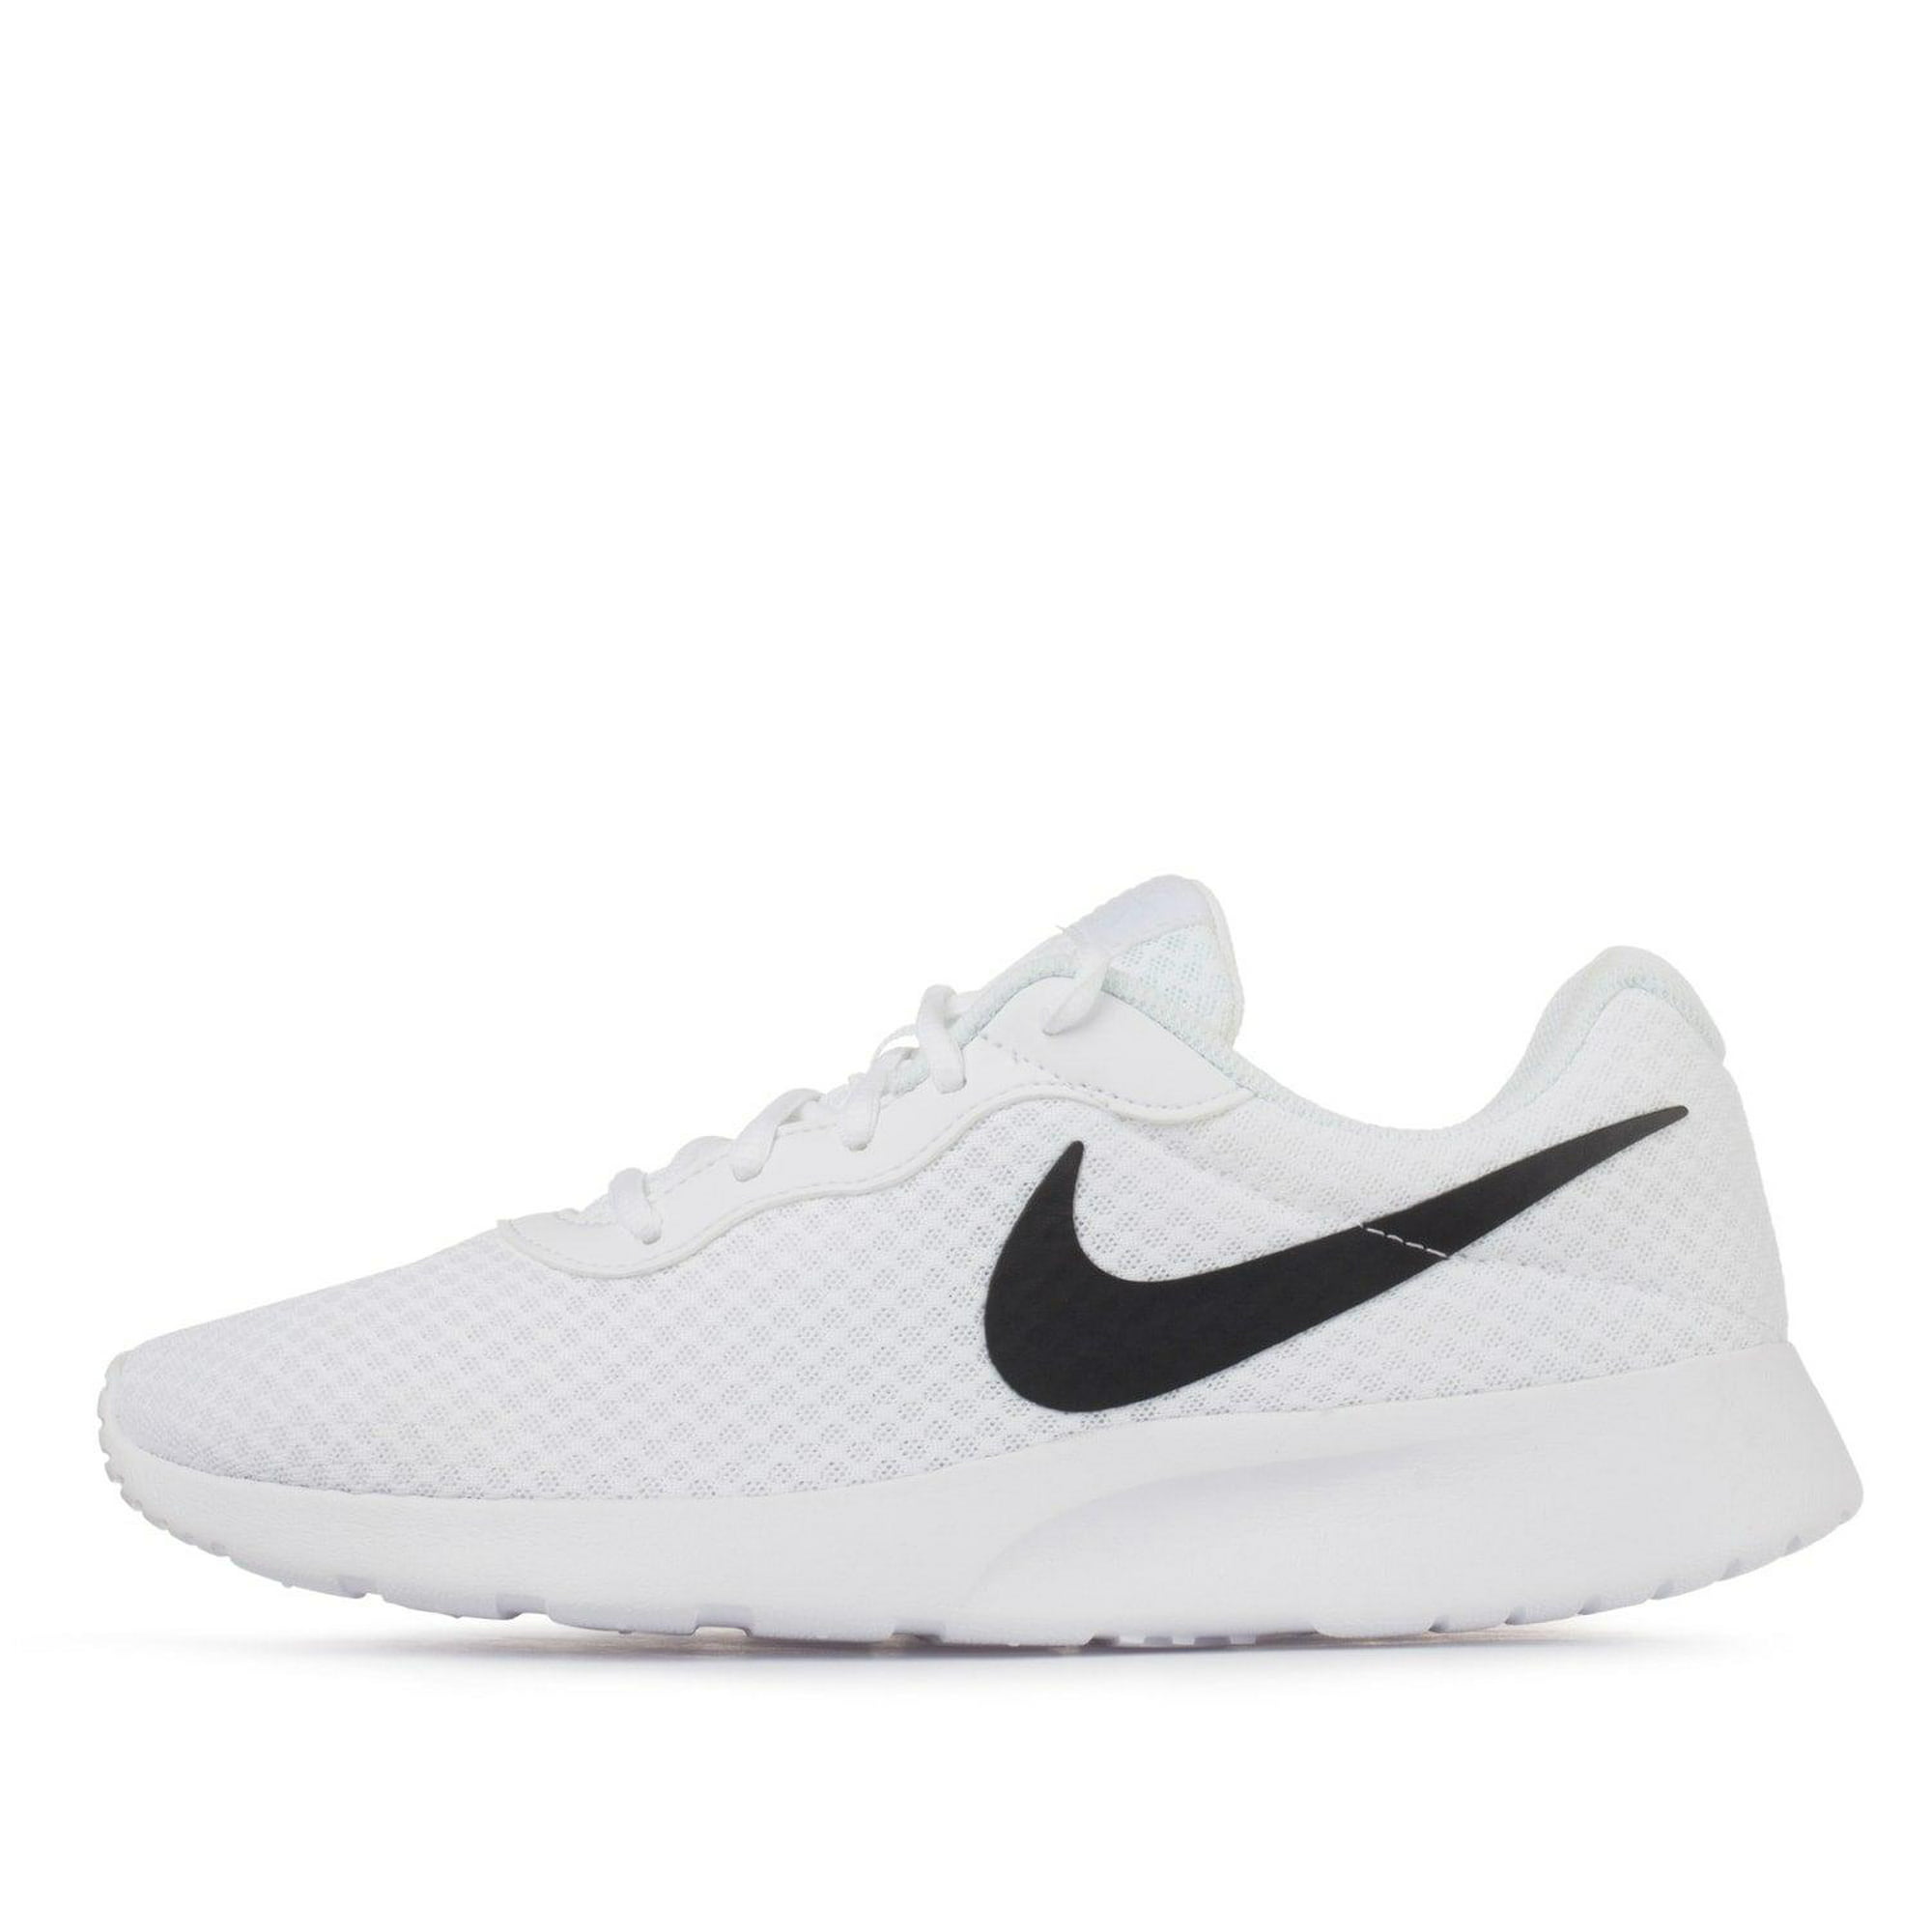 Tenis Nike Tanjun - DJ6258100 - Hombre blanco 25.5 Nike | Walmart en línea